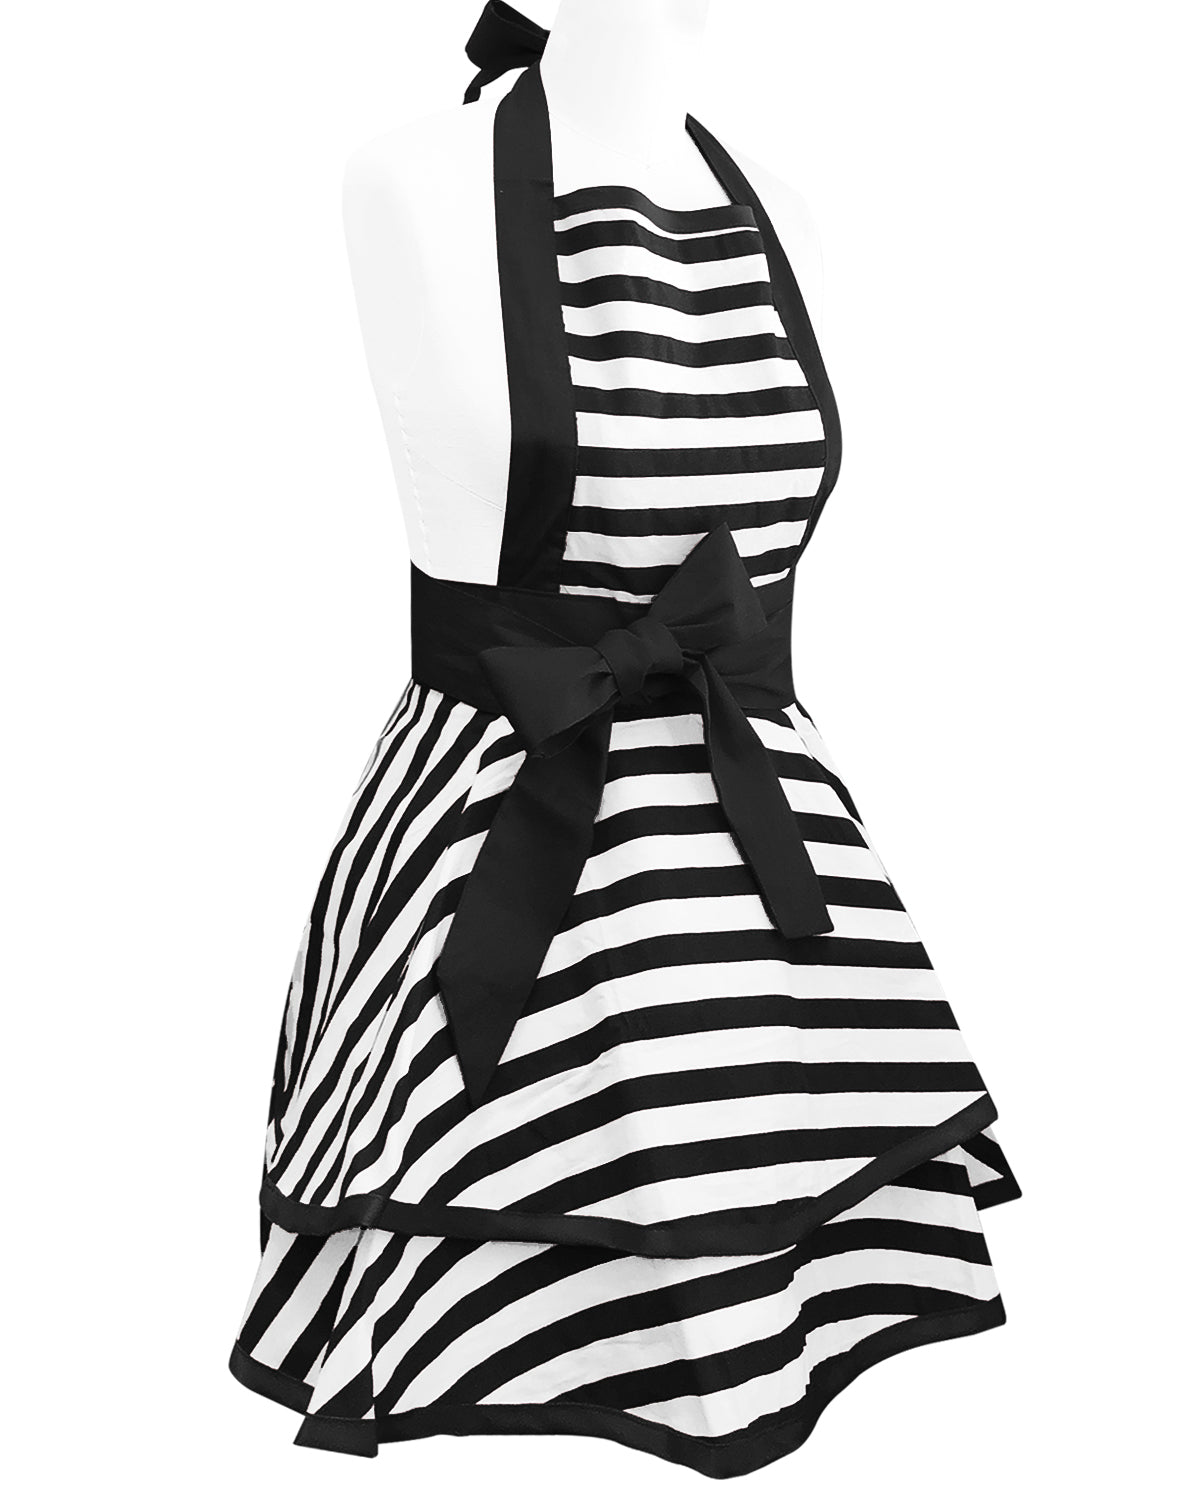 Kitchen apron. Black and white fabric clothes... - Stock Illustration  [83128221] - PIXTA